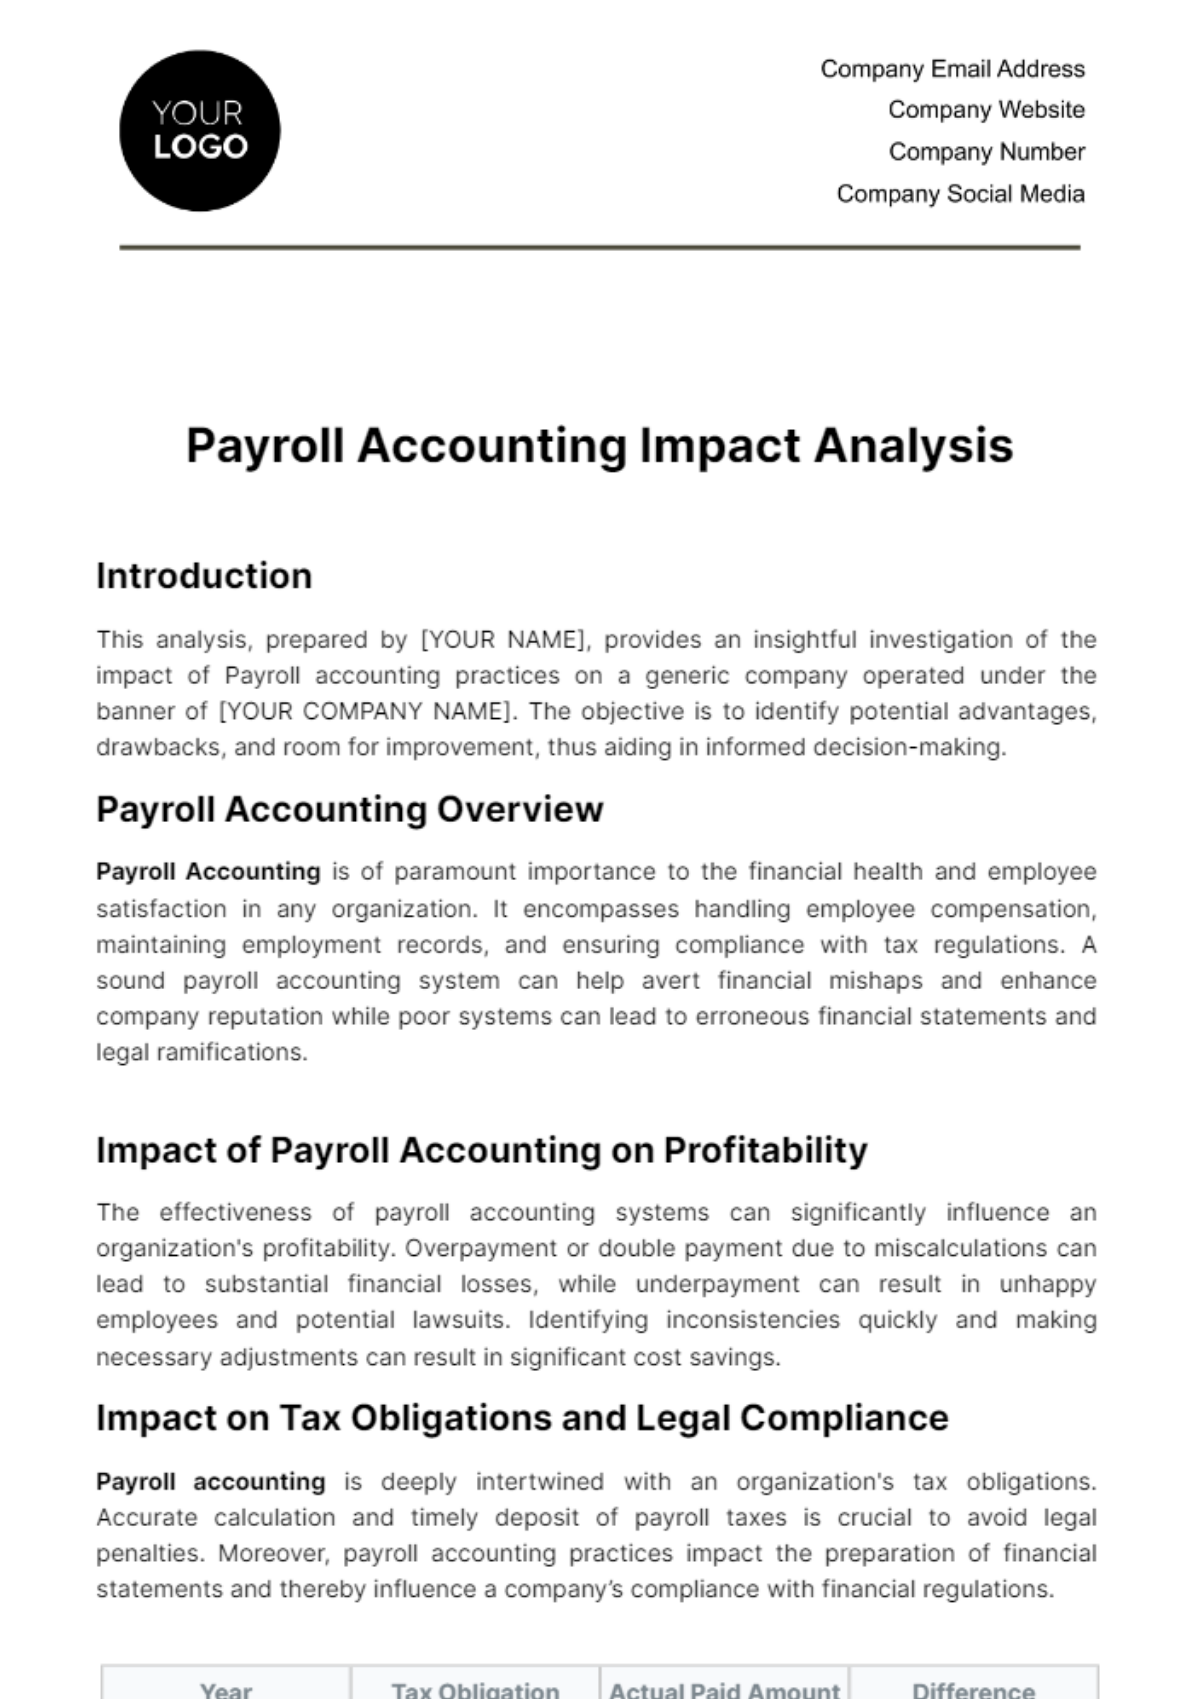 Payroll Accounting Impact Analysis Template